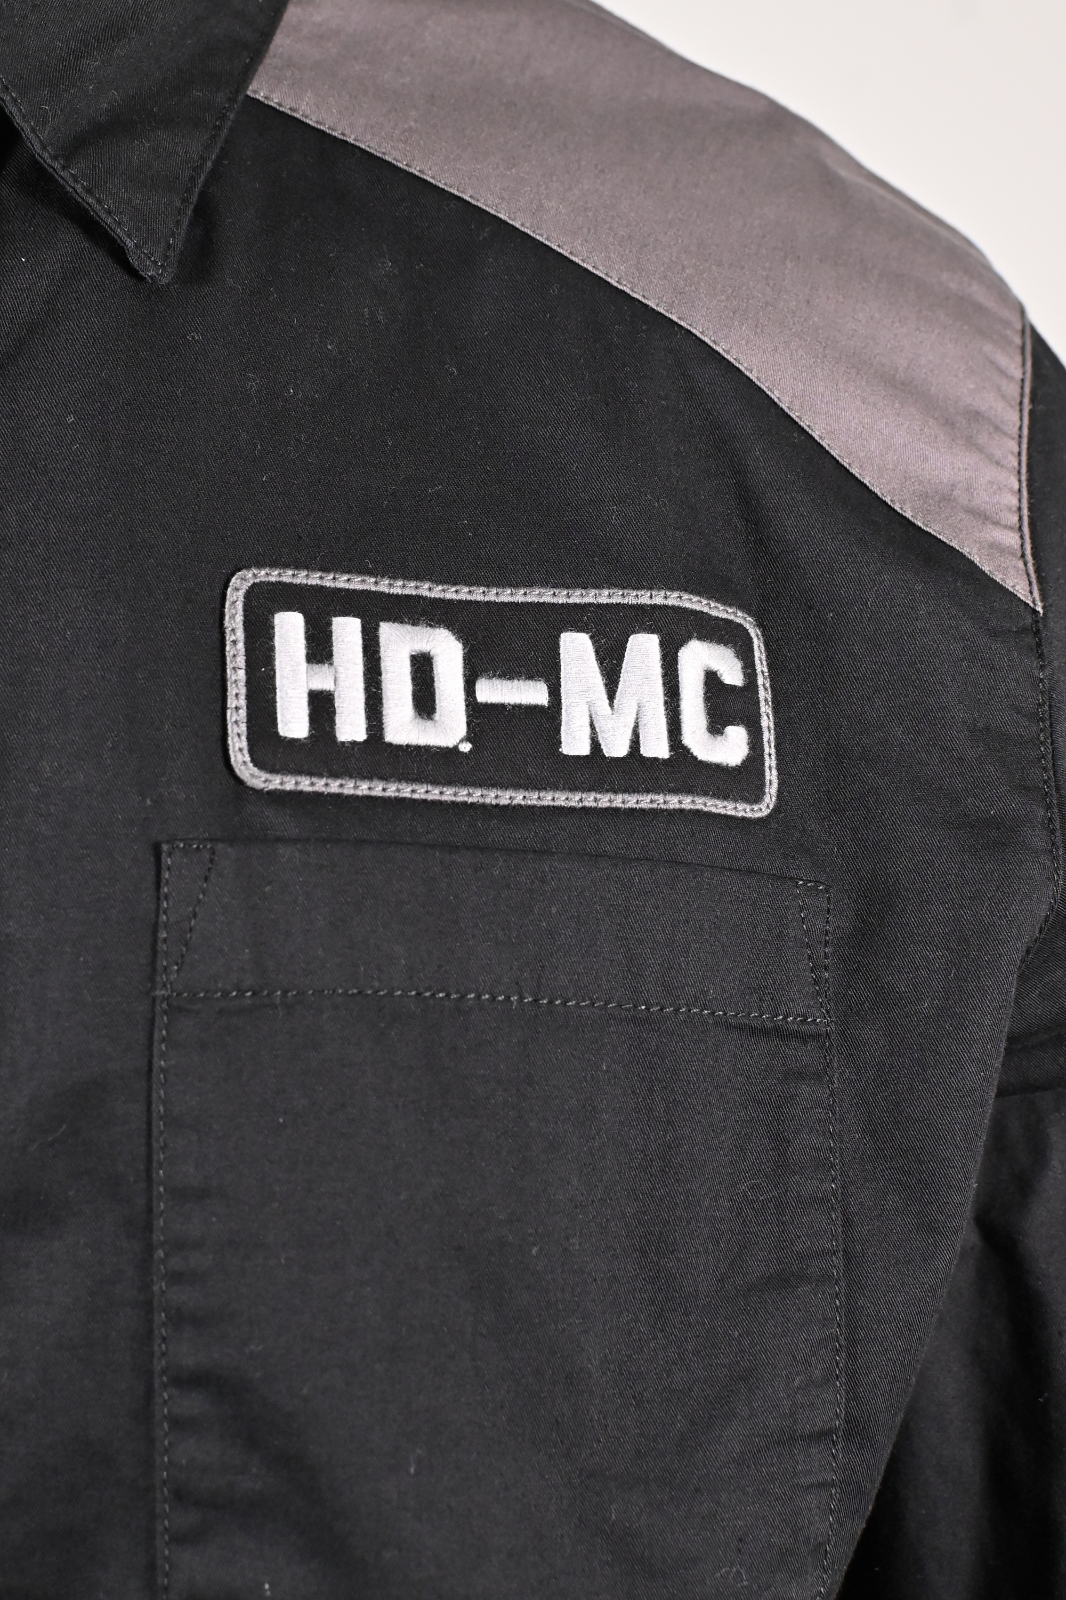 Harley-Davidson Men's Shirt Grey Black HDMC Long Sleeve Woven (124)